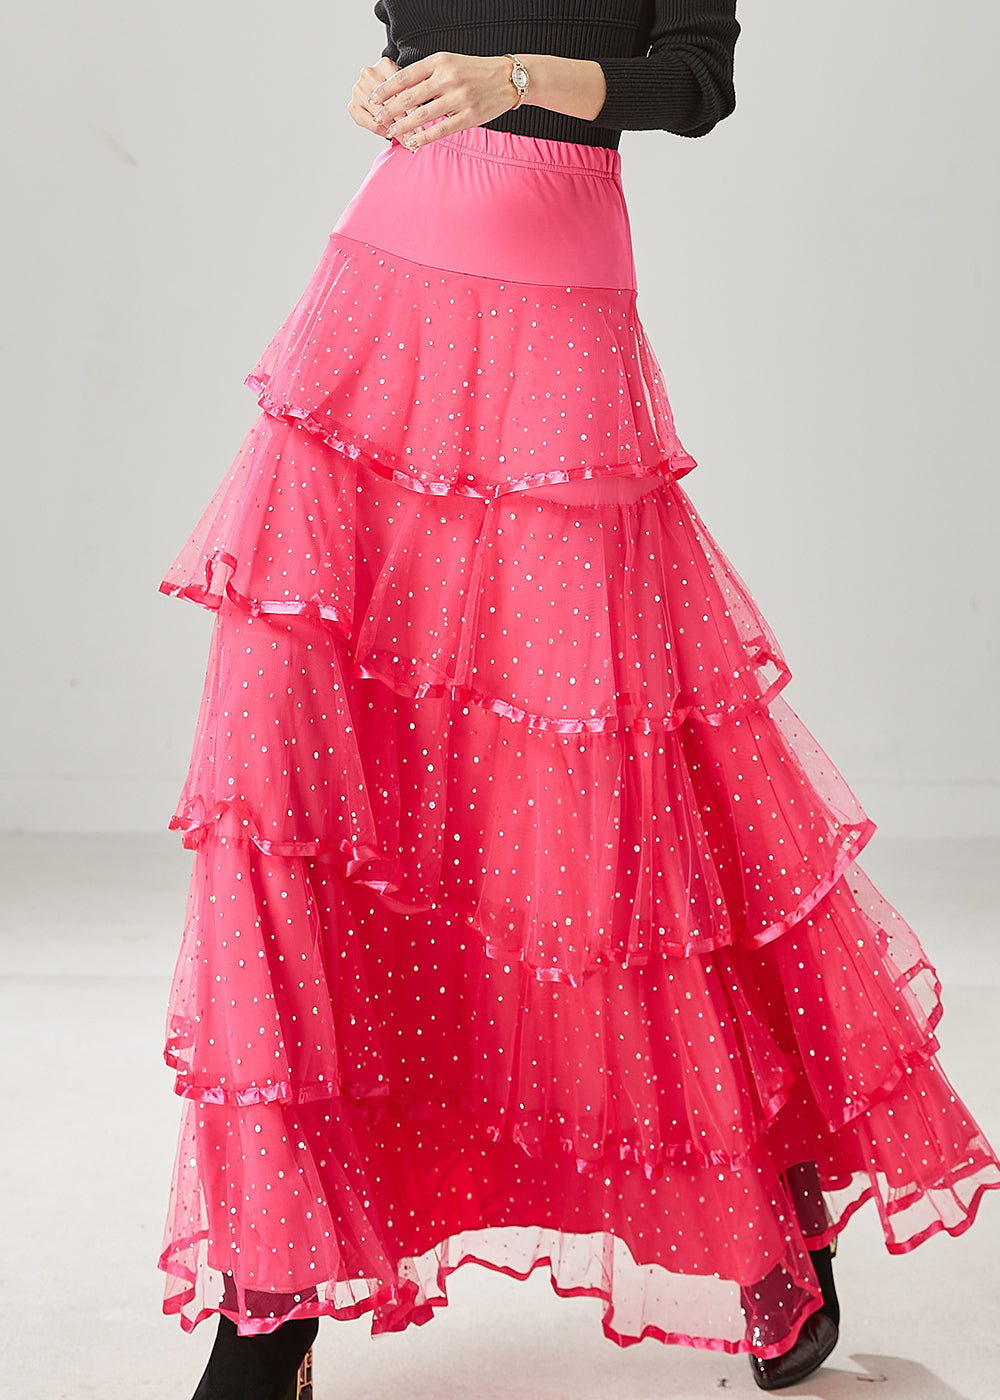 Pink Silm Fit Tulle Skirt Exra Large Hem Spring